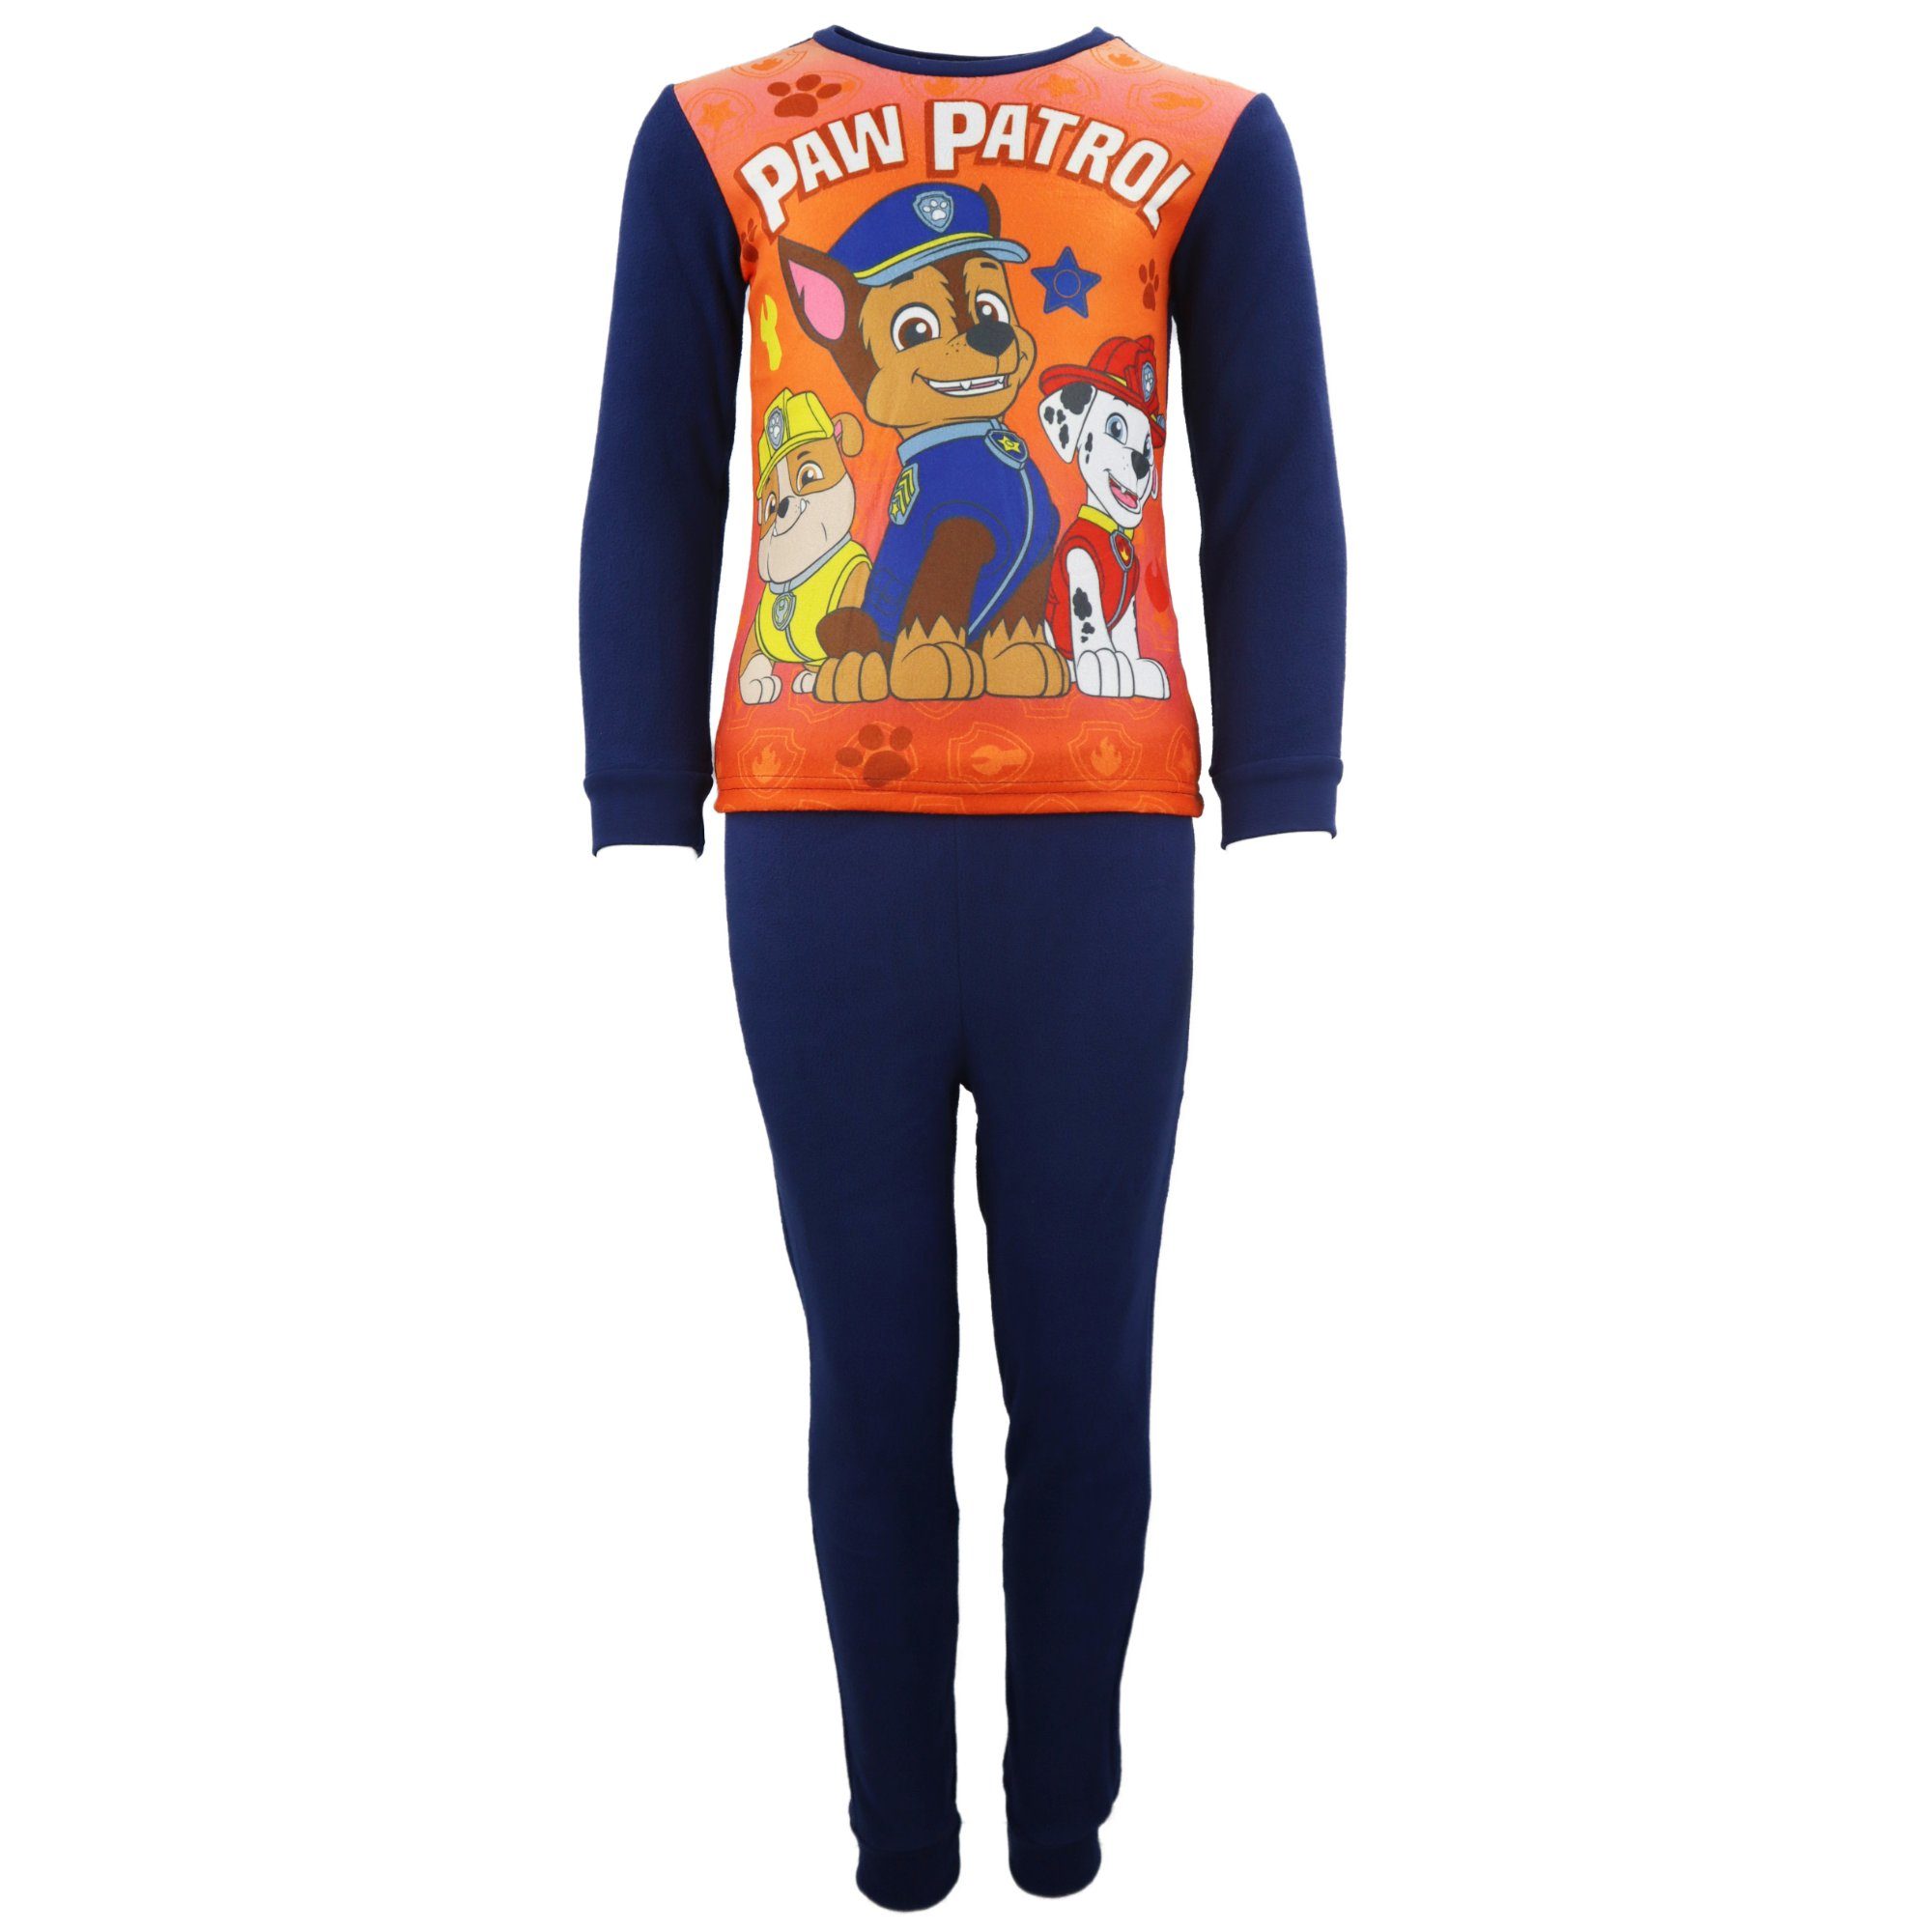 PAW PATROL Schlafanzug Paw Patrol Polar Fleece Kinder Jungen Pyjama Gr. 92 bis 128 Blau